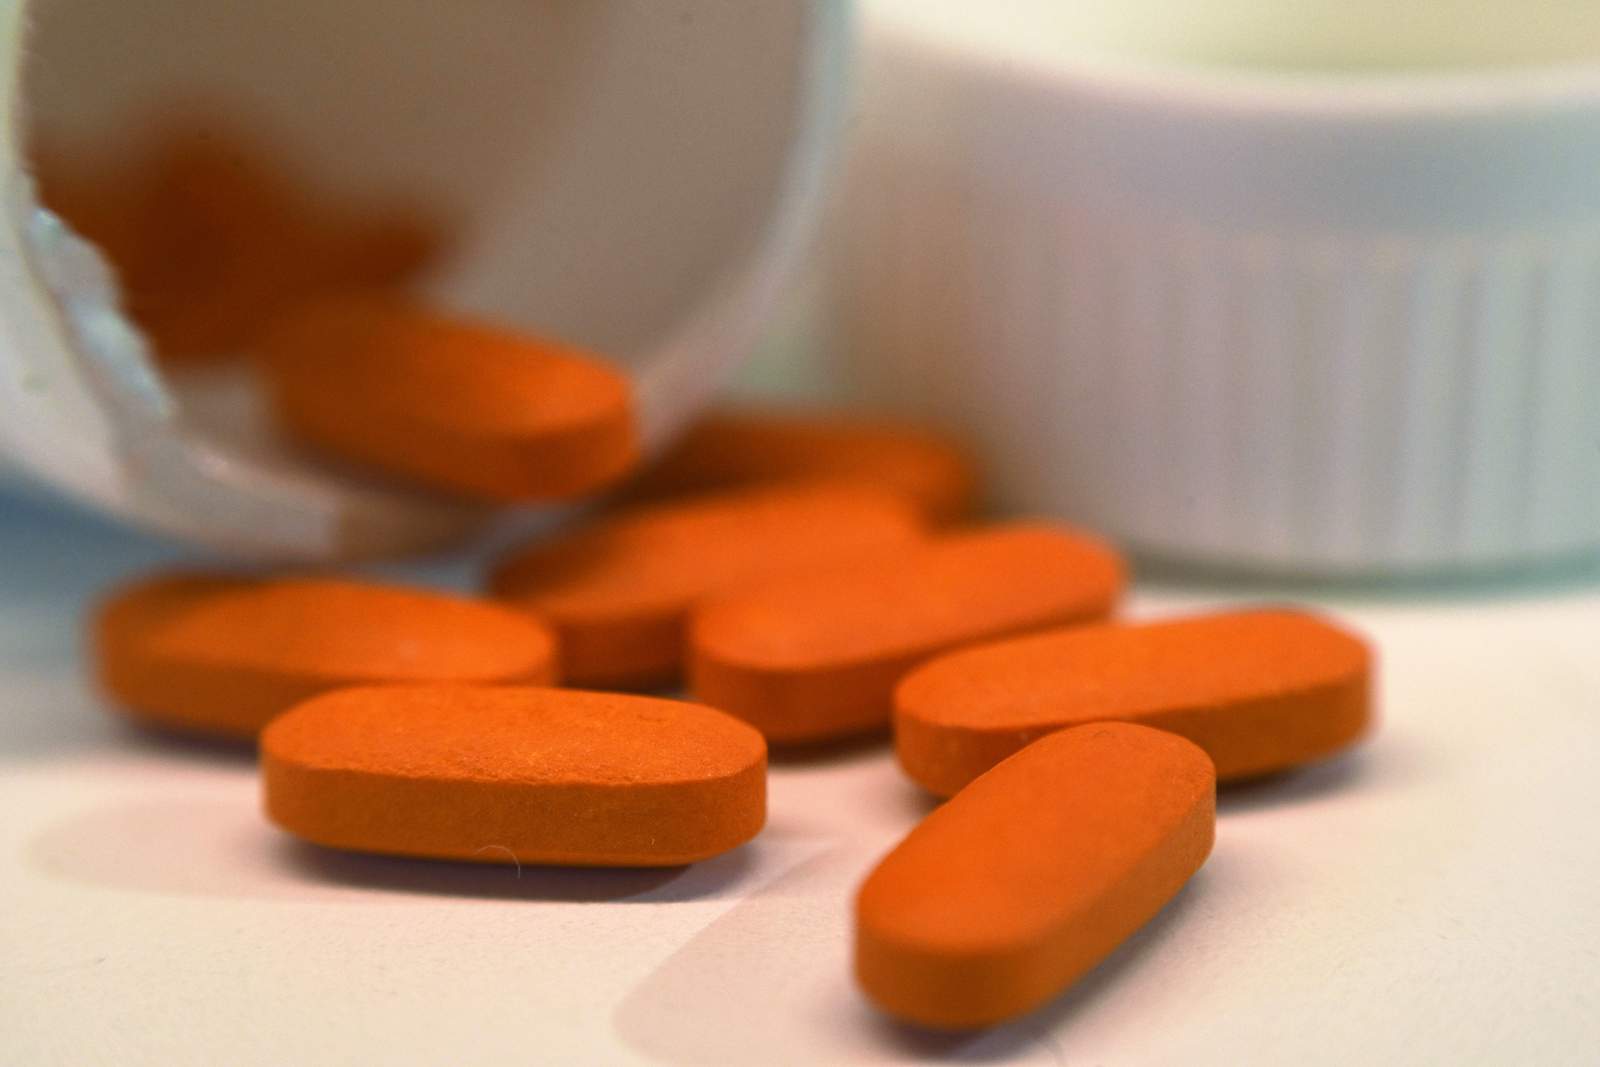 Ask 2: Should taking ibuprofen be avoided during the coronavirus outbreak?